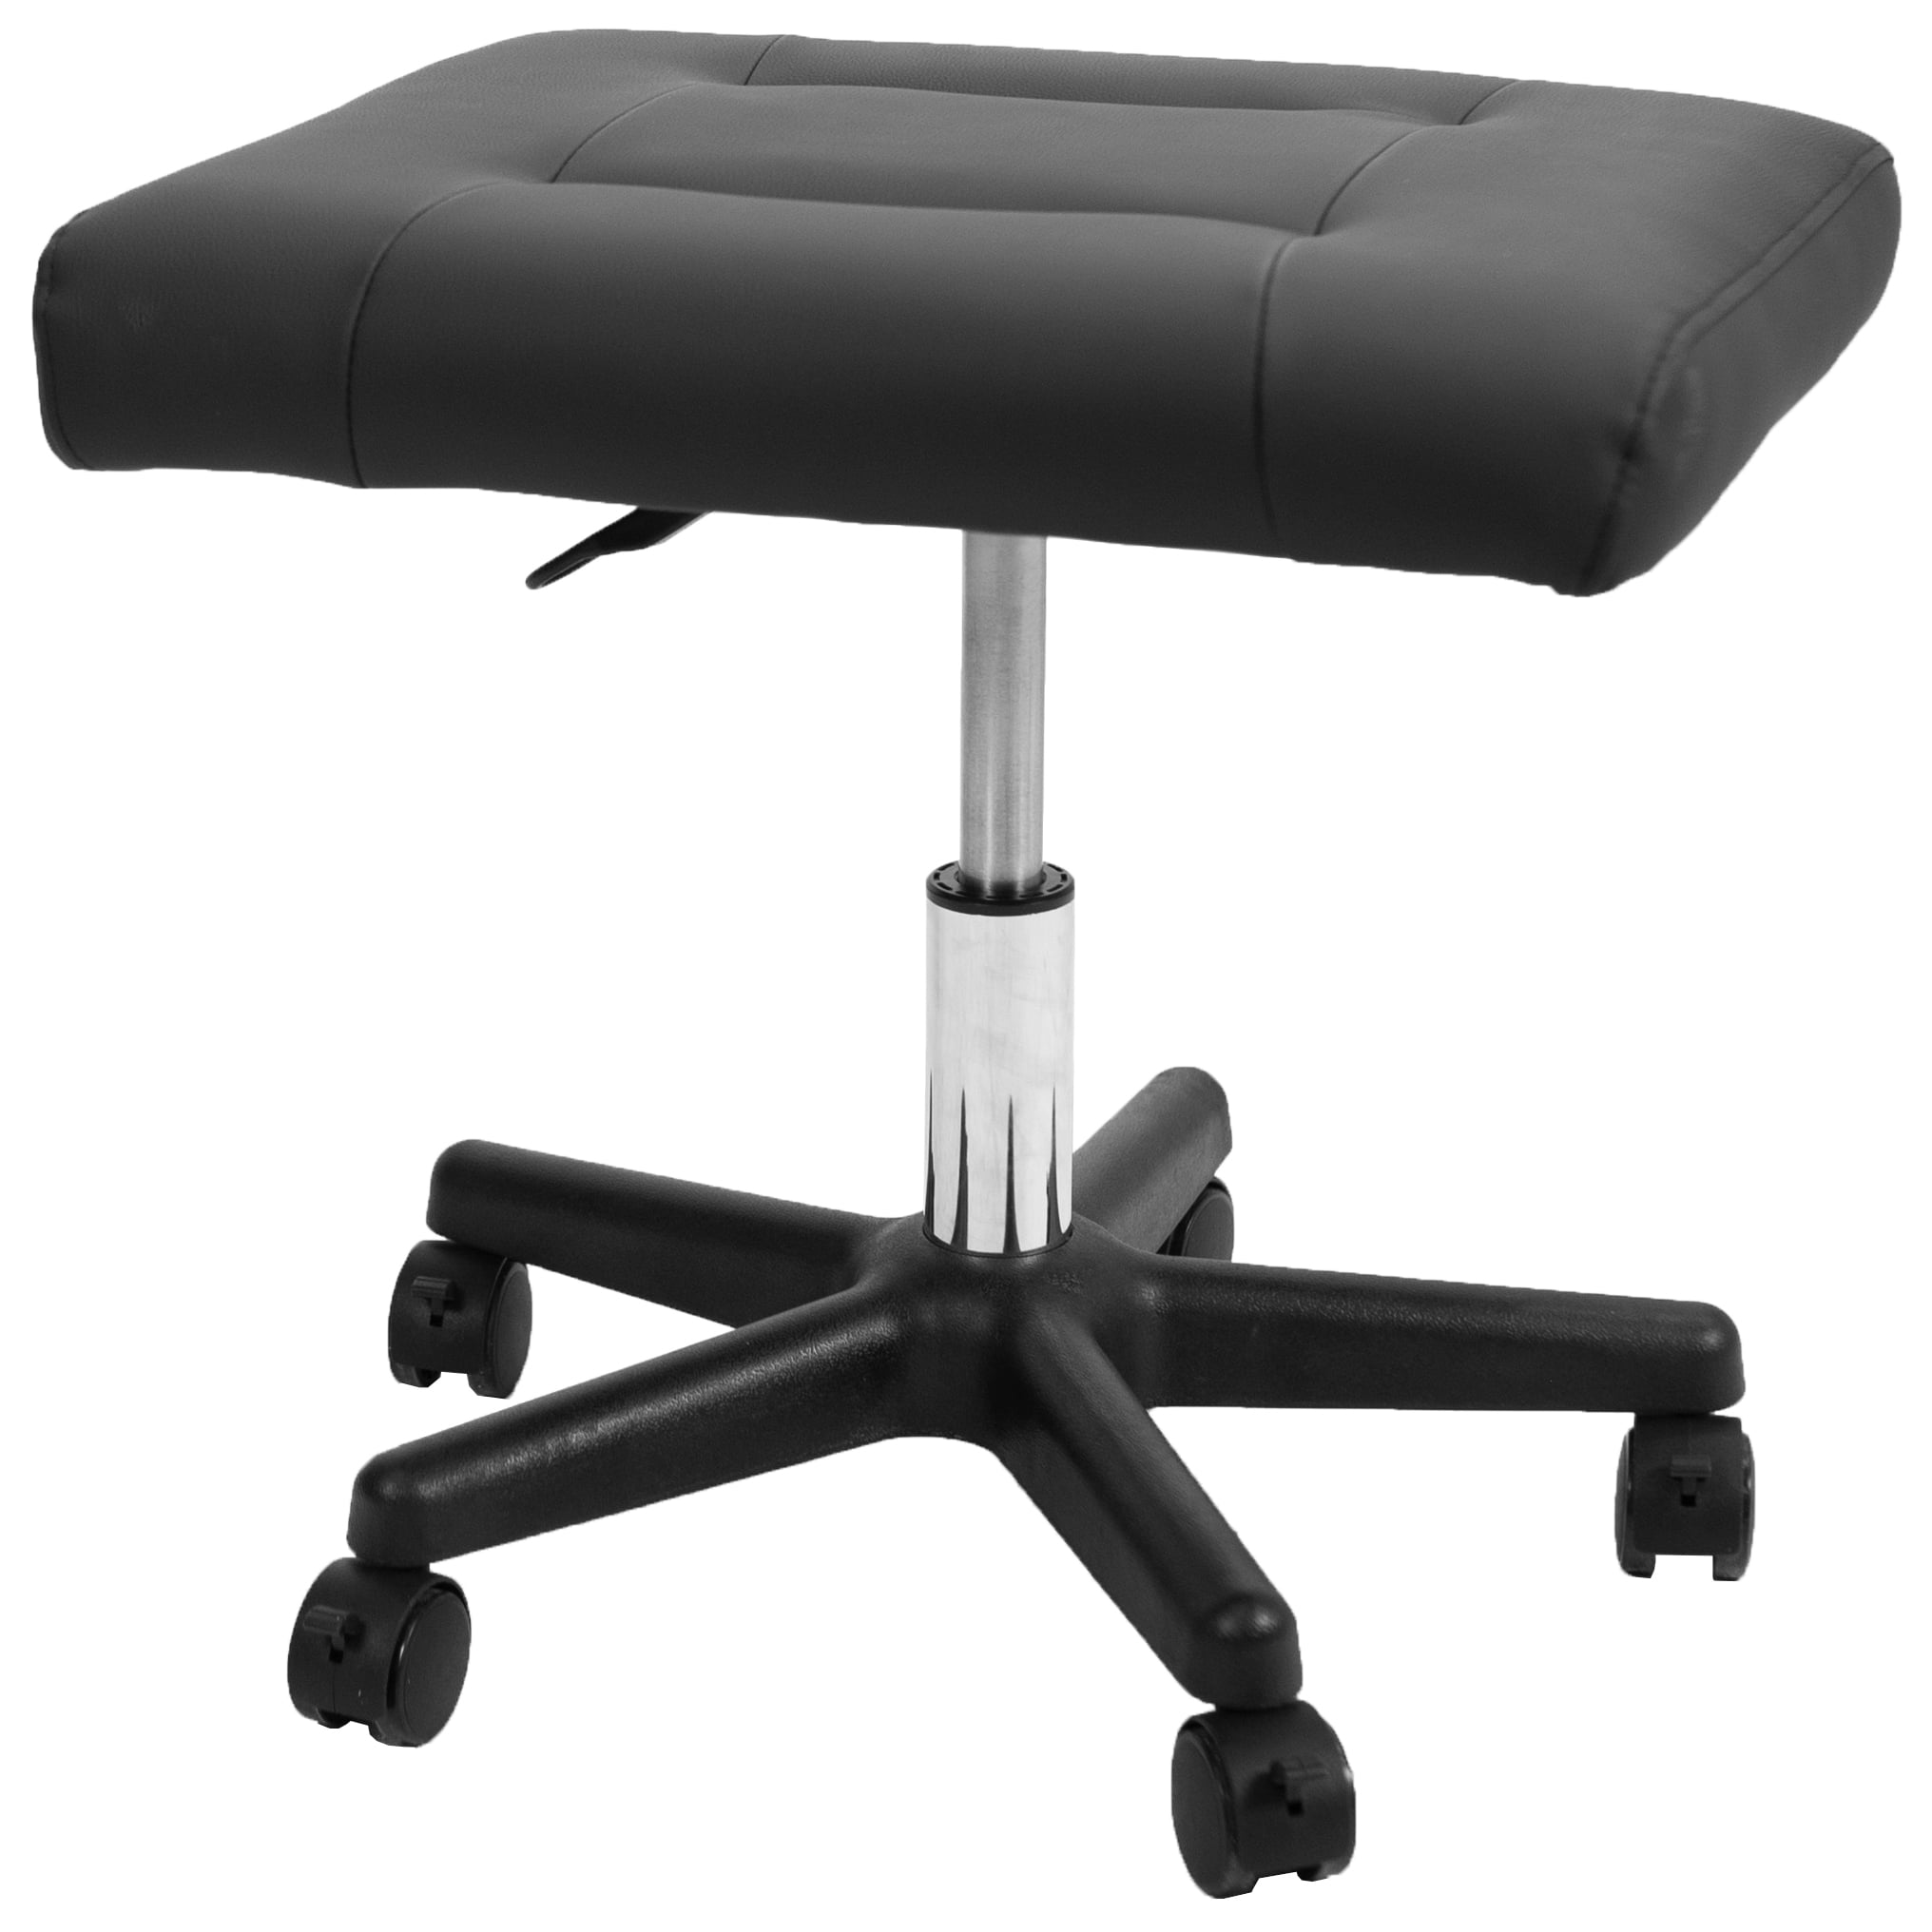 VIVO Black 2-in-1 Ergonomic Footrest with Wheels, Height